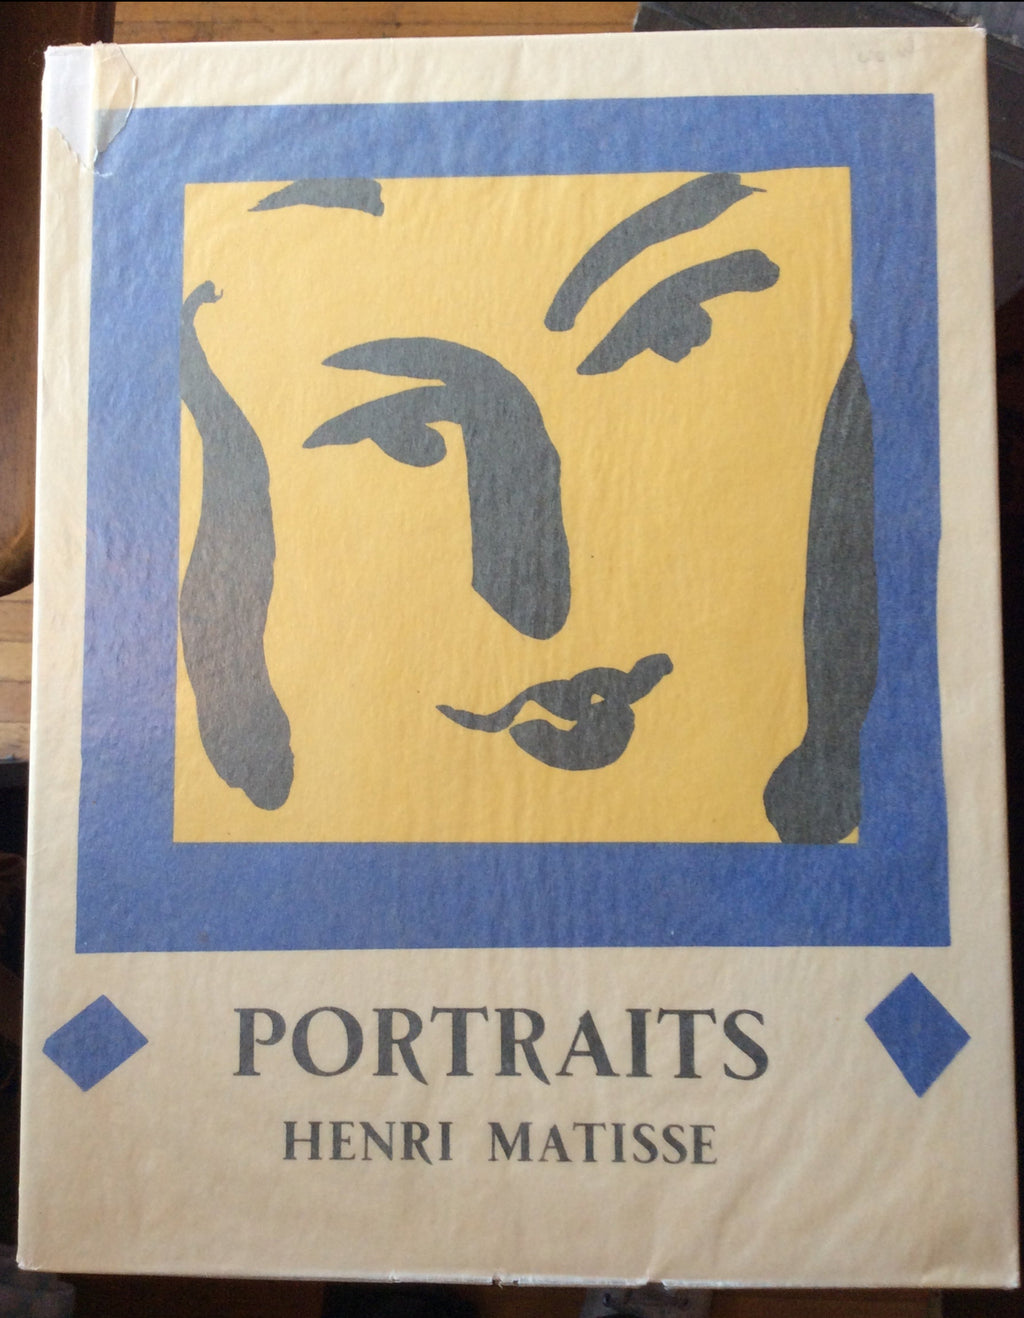 Portraits by Henri Matisse Henri Matisse, Published by André Sauret, Monte-Carlo, 1954